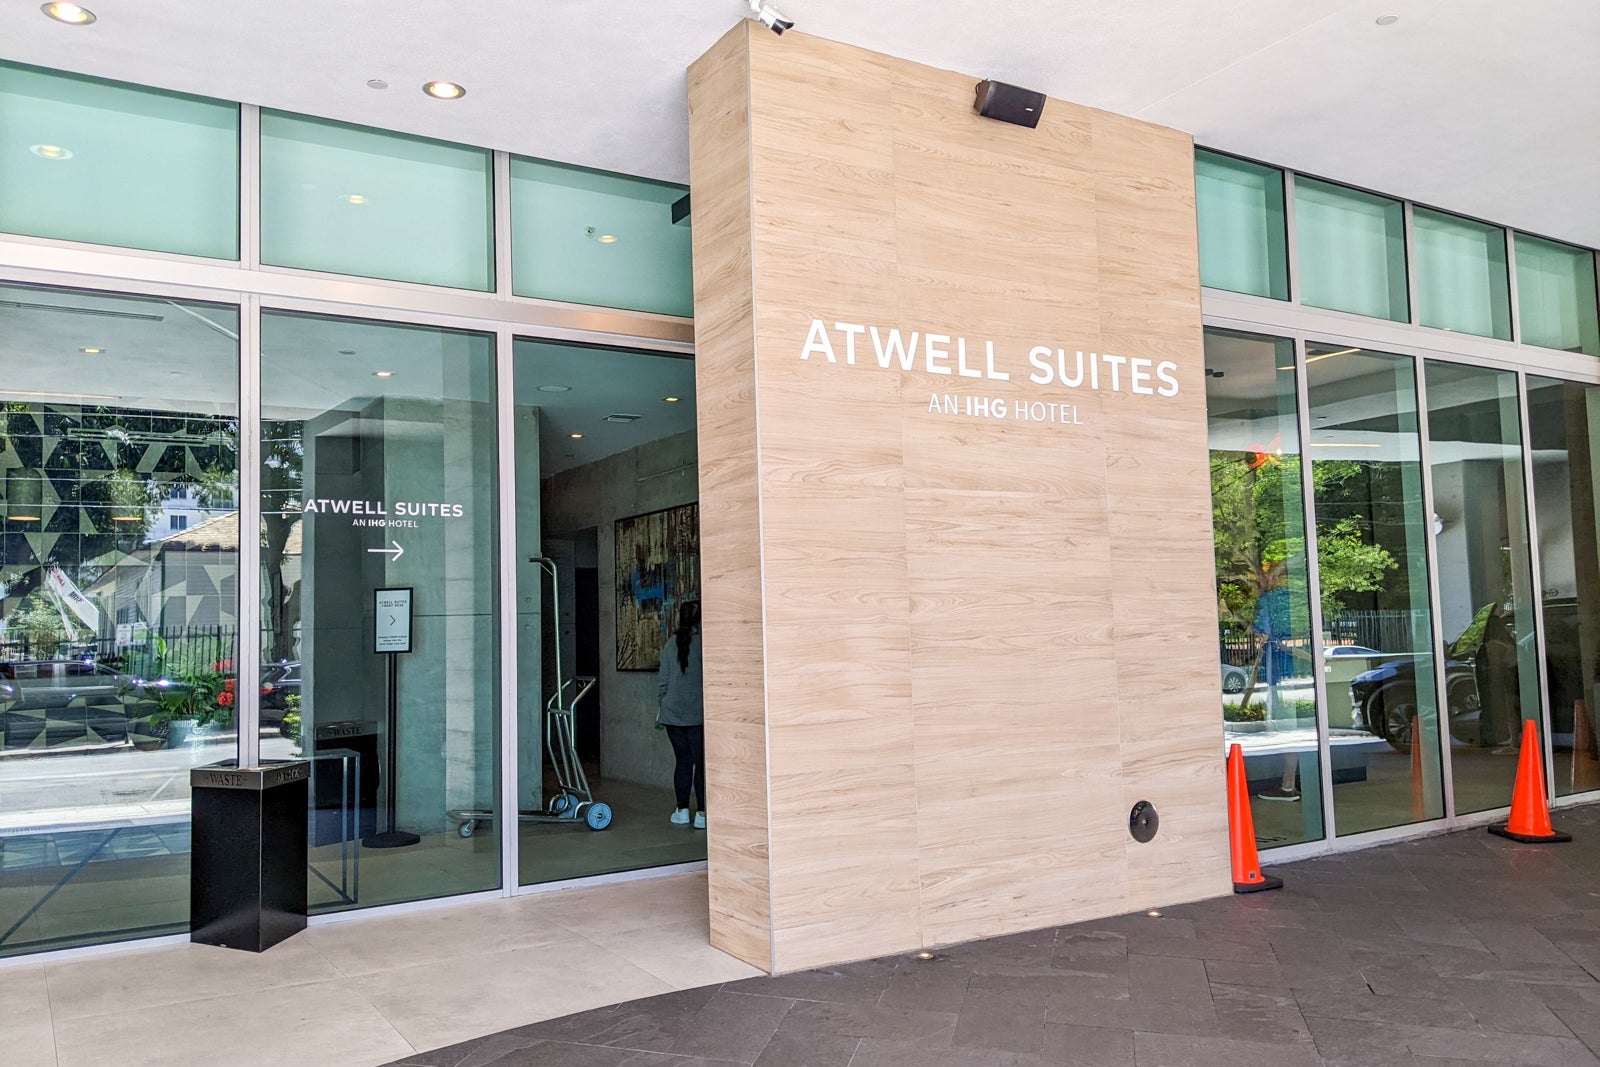 Atwell Suites Miami enterance